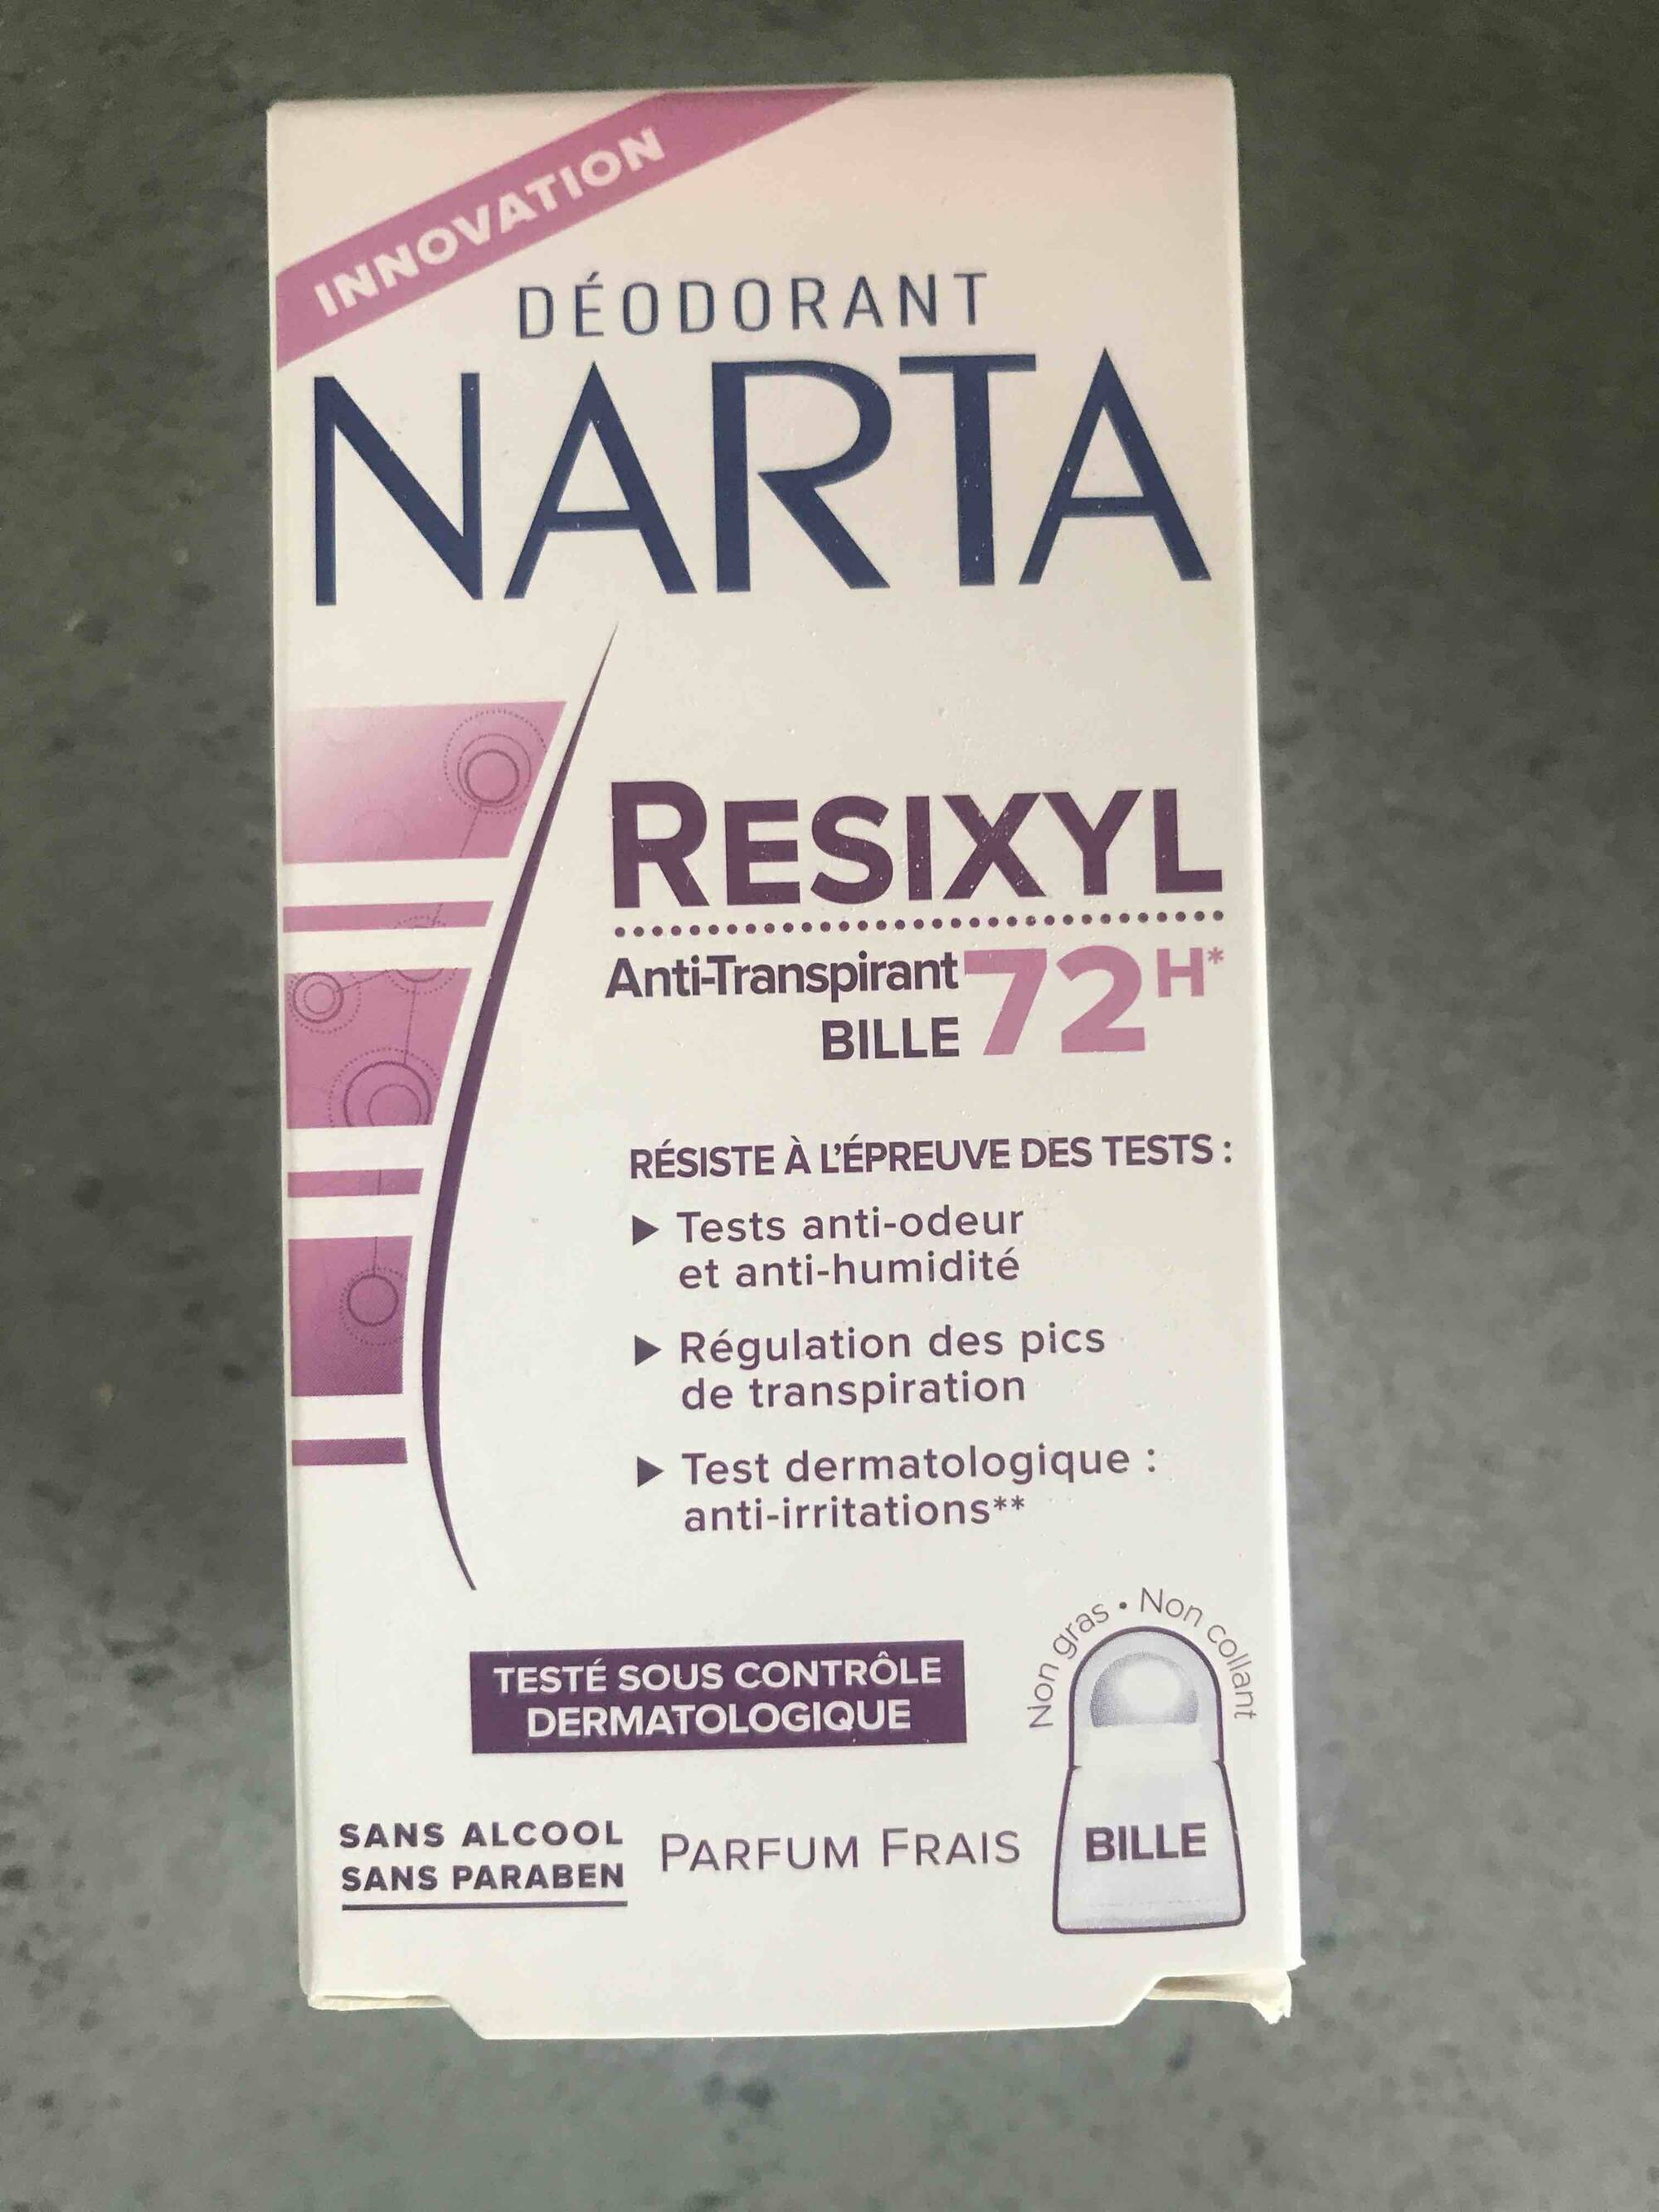 NARTA - Déodorant bille resixyl anti-transpirant 72h